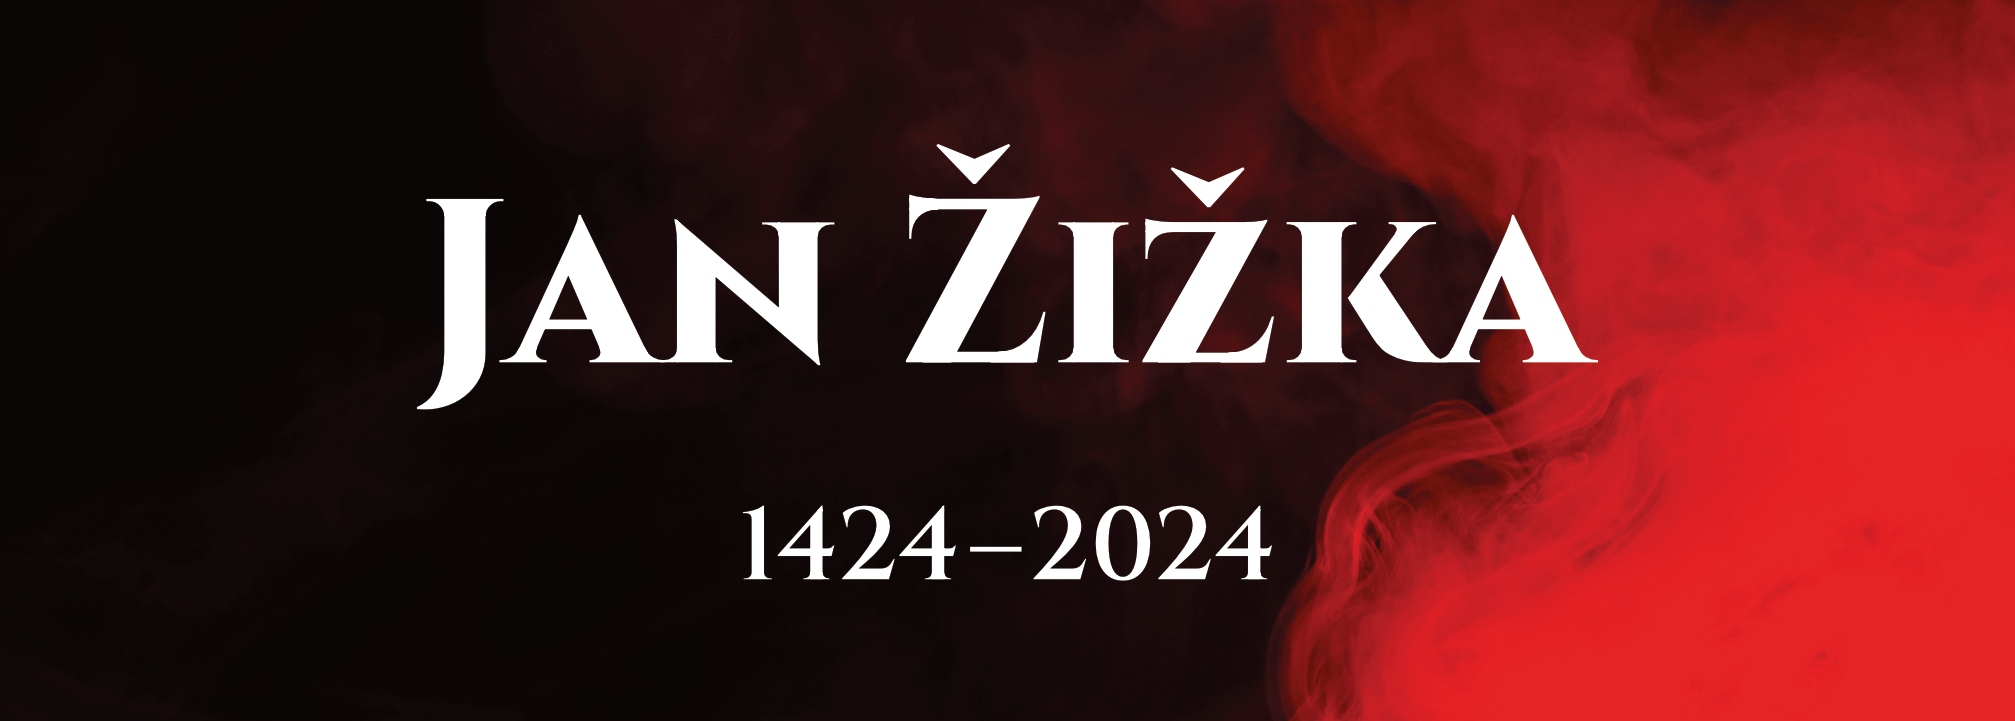 Jan-Zizka-homepage-mensi.jpg